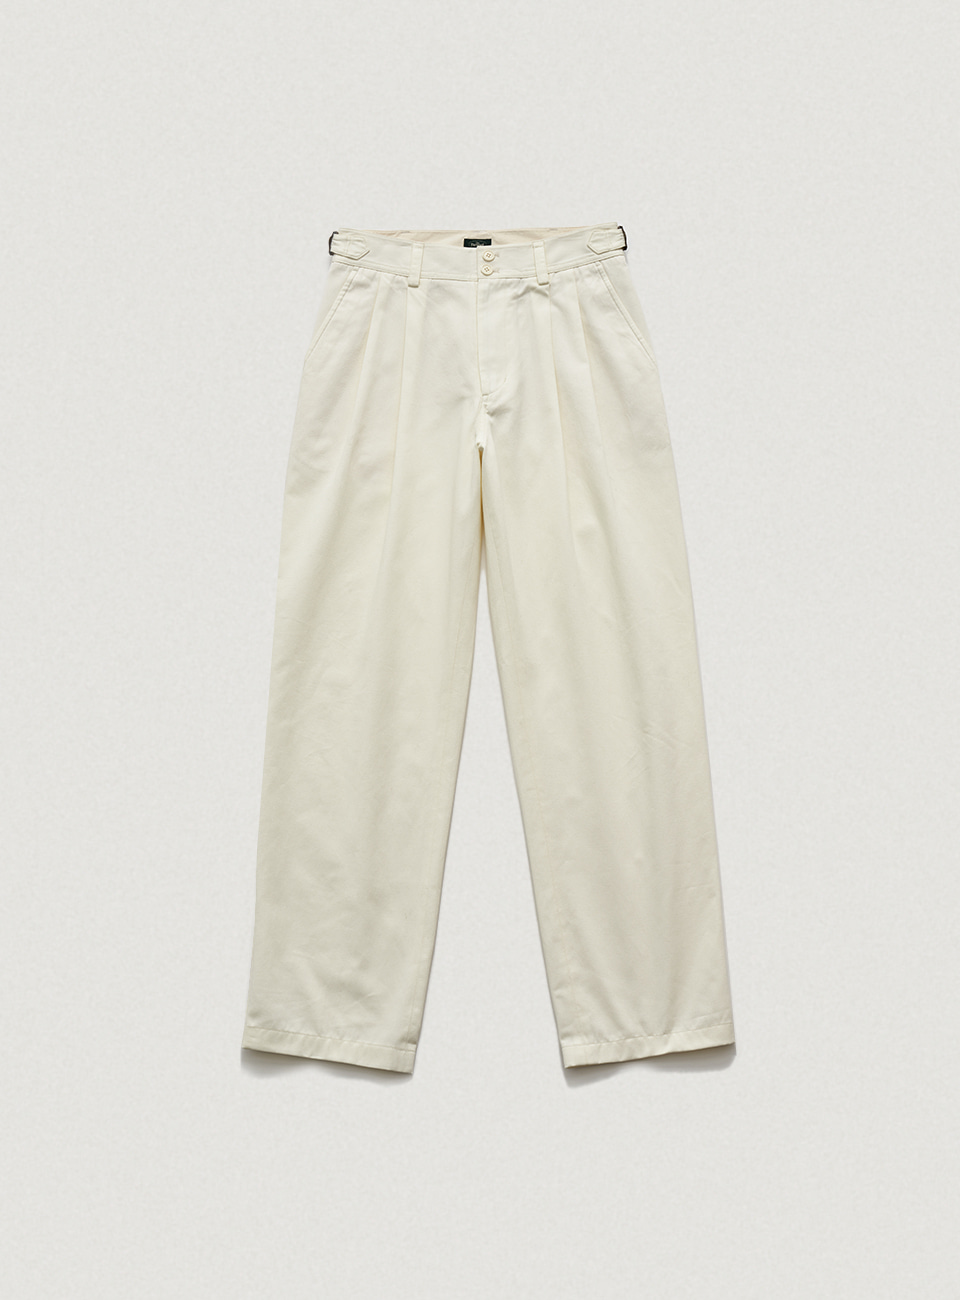 Ivory Twoett Cotton Chino Pants